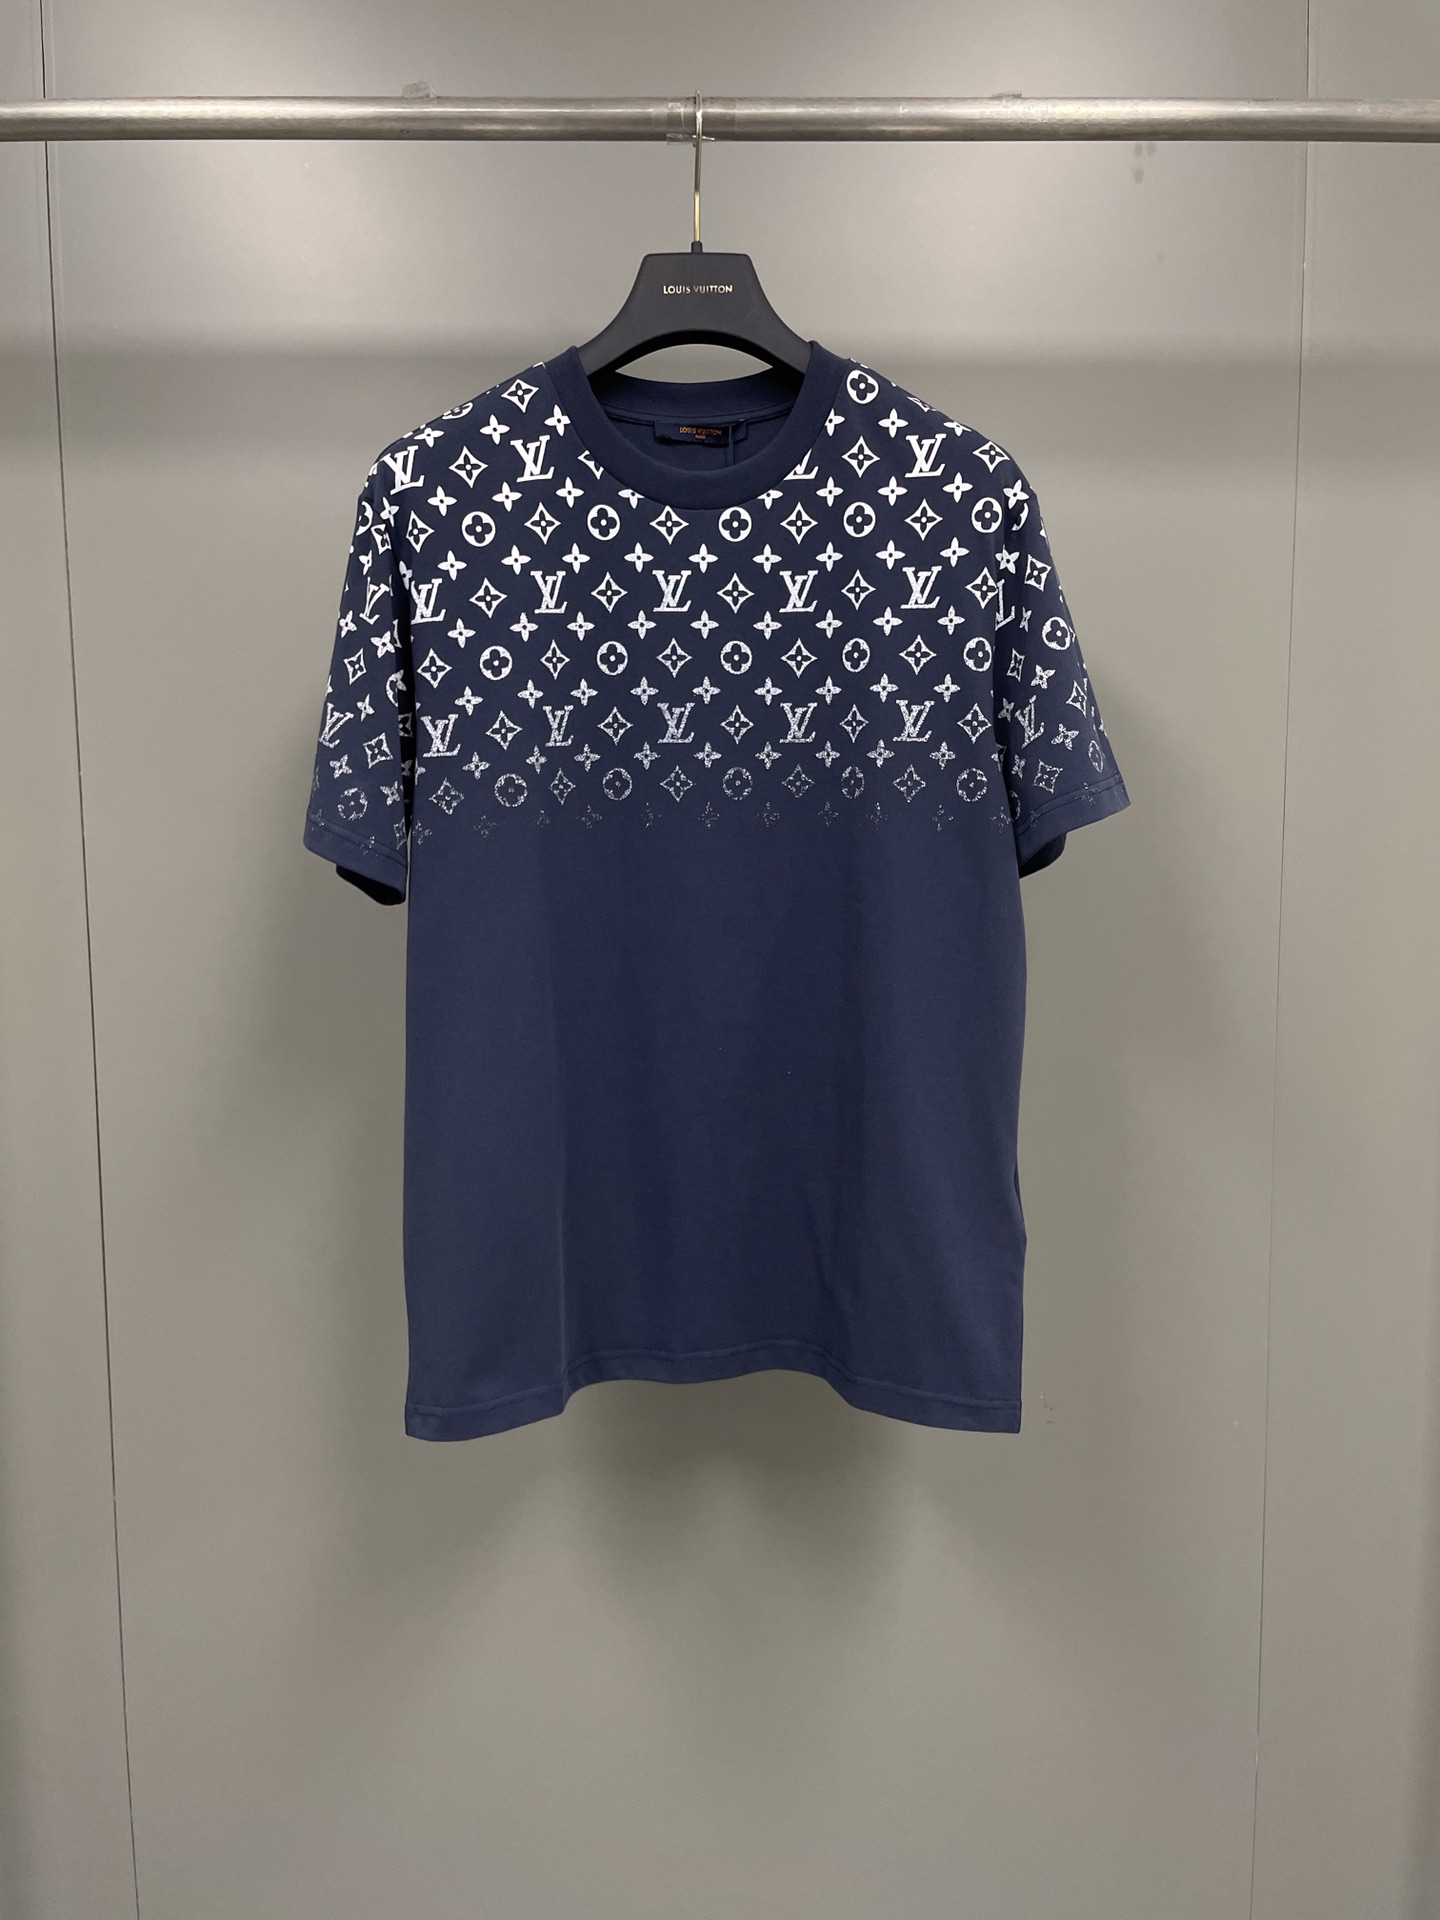 Louis Vuitton Clothing T-Shirt Black Blue Dark Grey Printing Cotton Knitting Short Sleeve